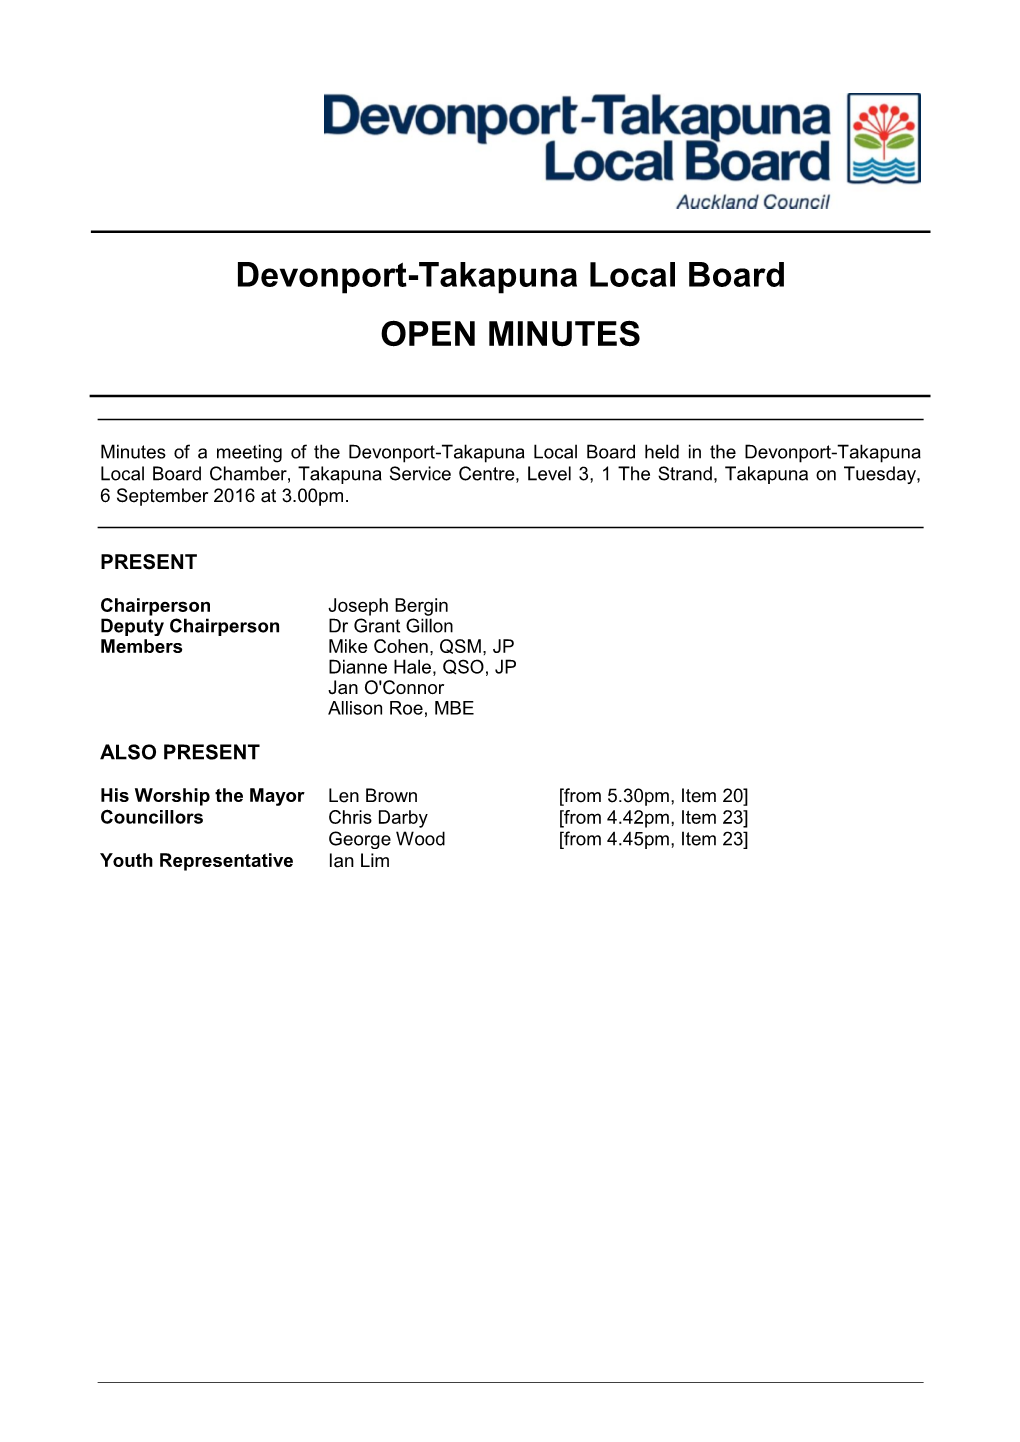 Minutes of Devonport-Takapuna Local Board